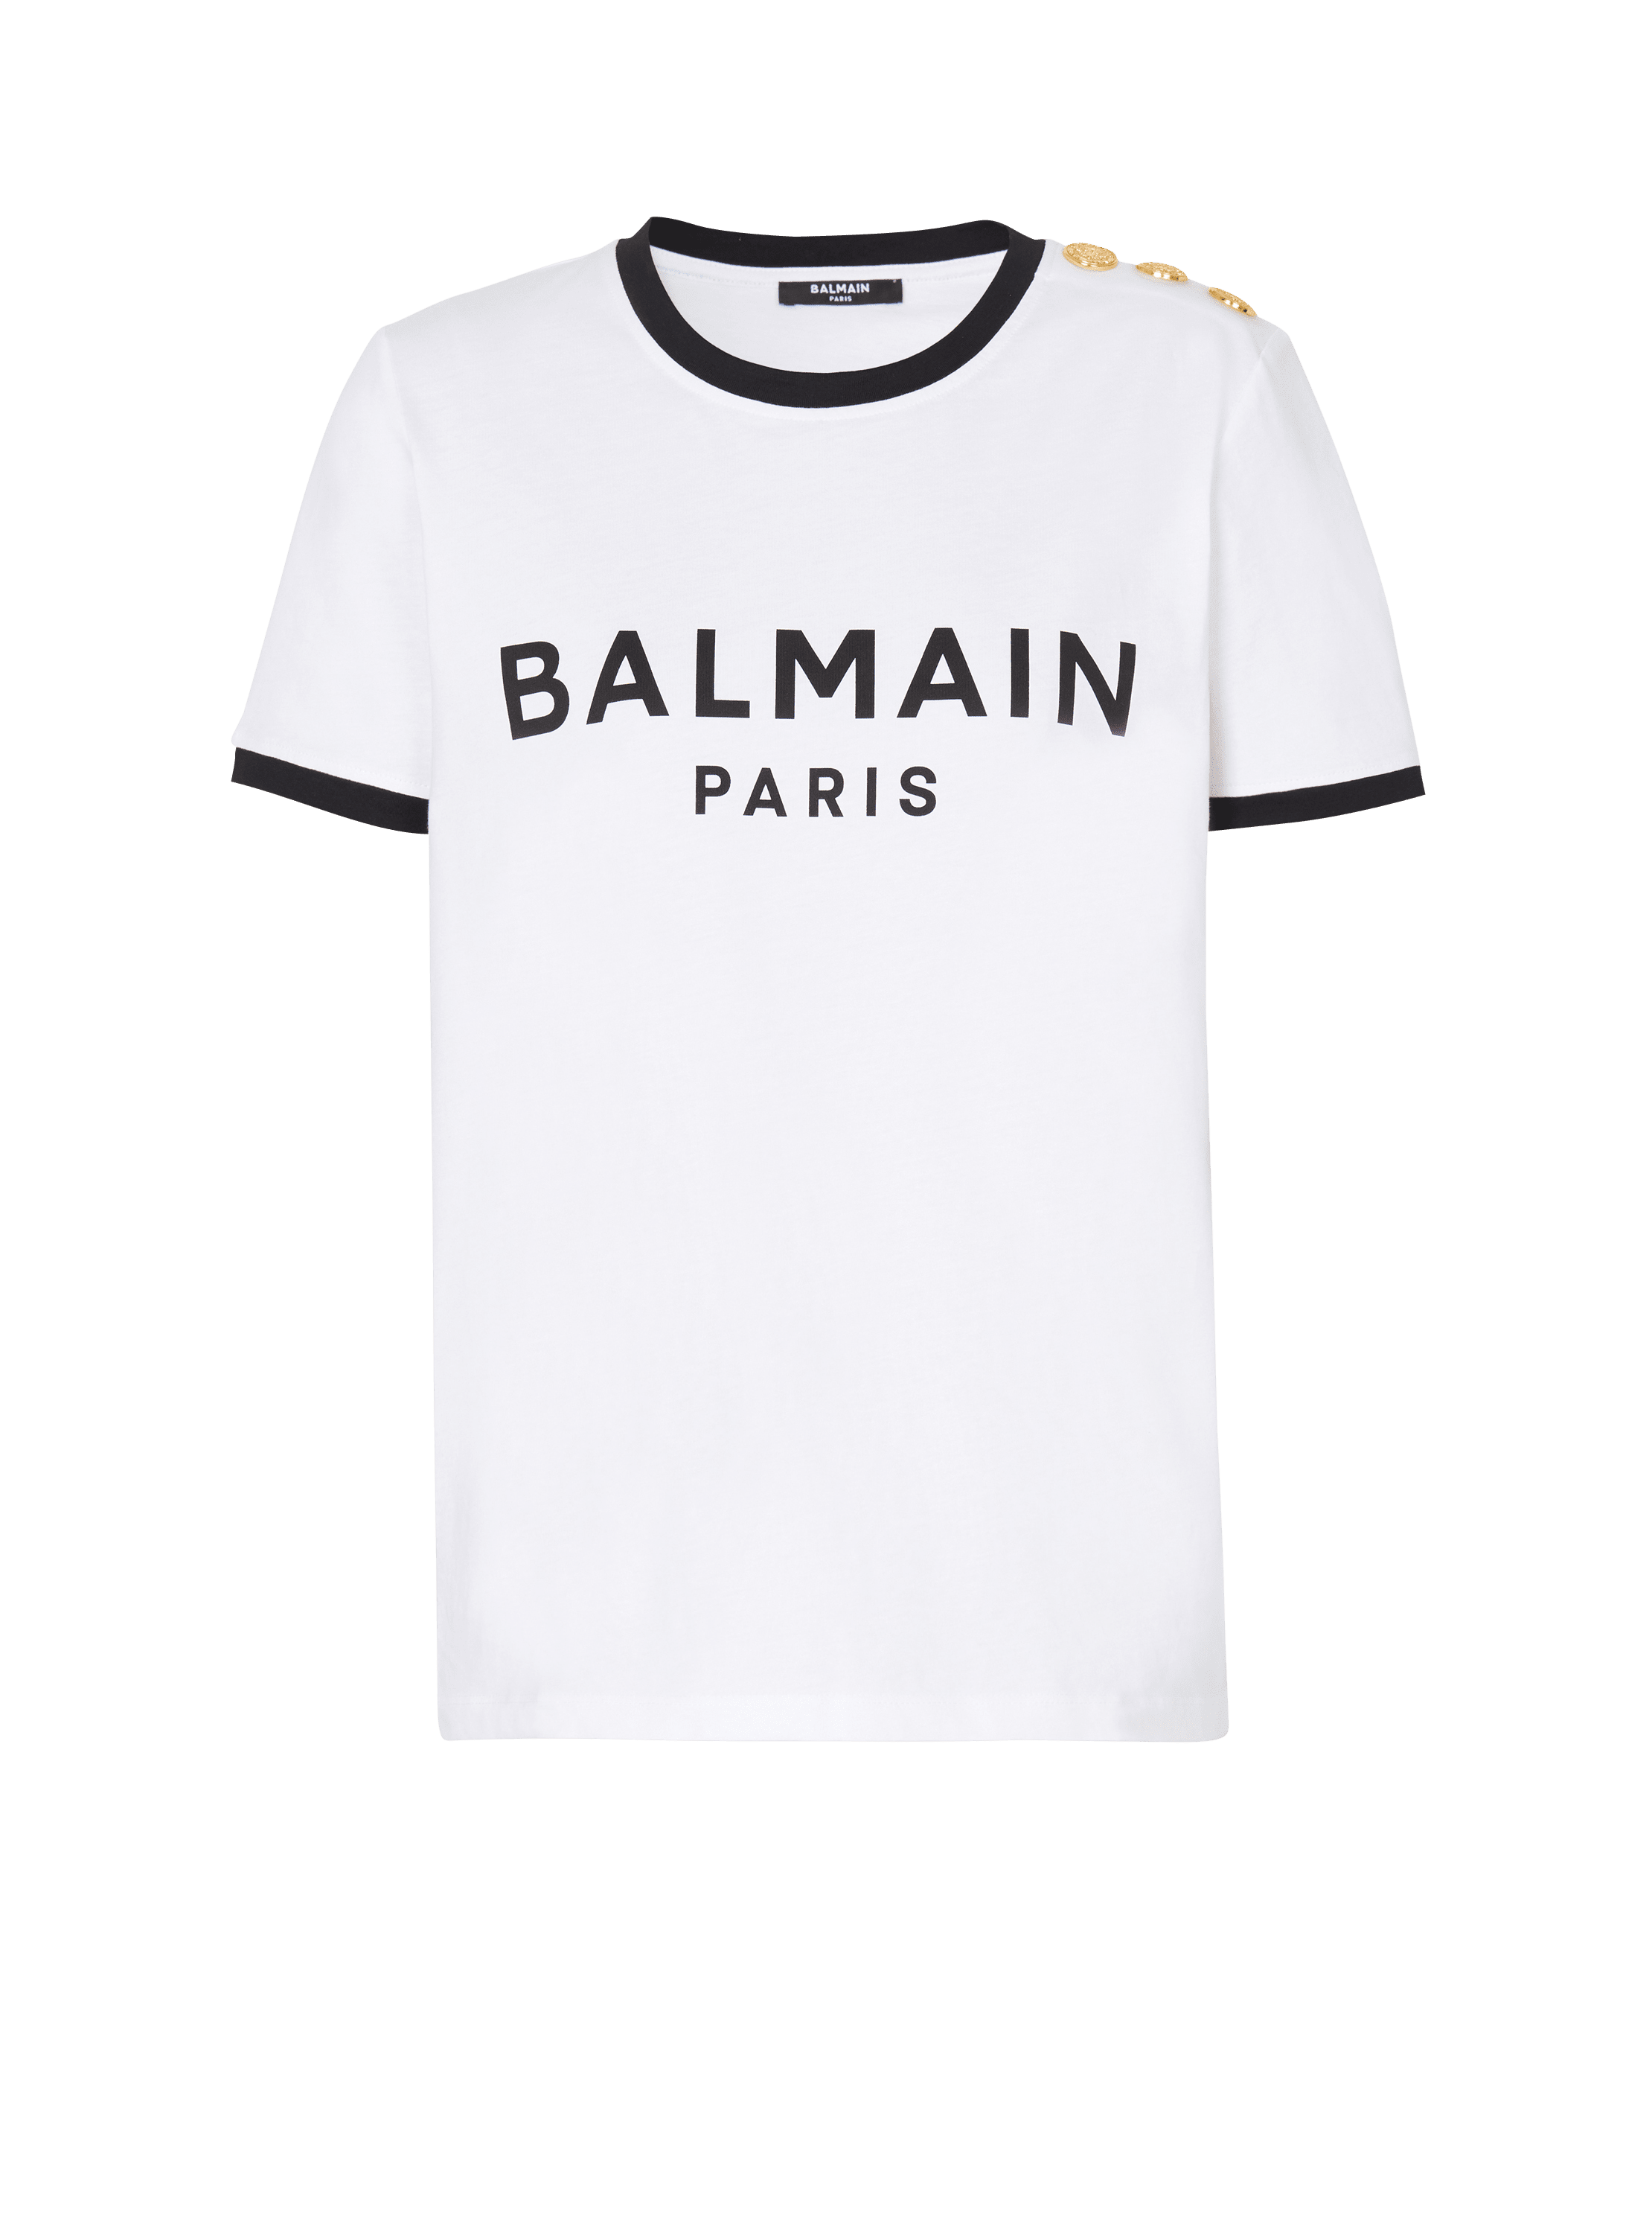 Balmain Paris 3-button T-shirt